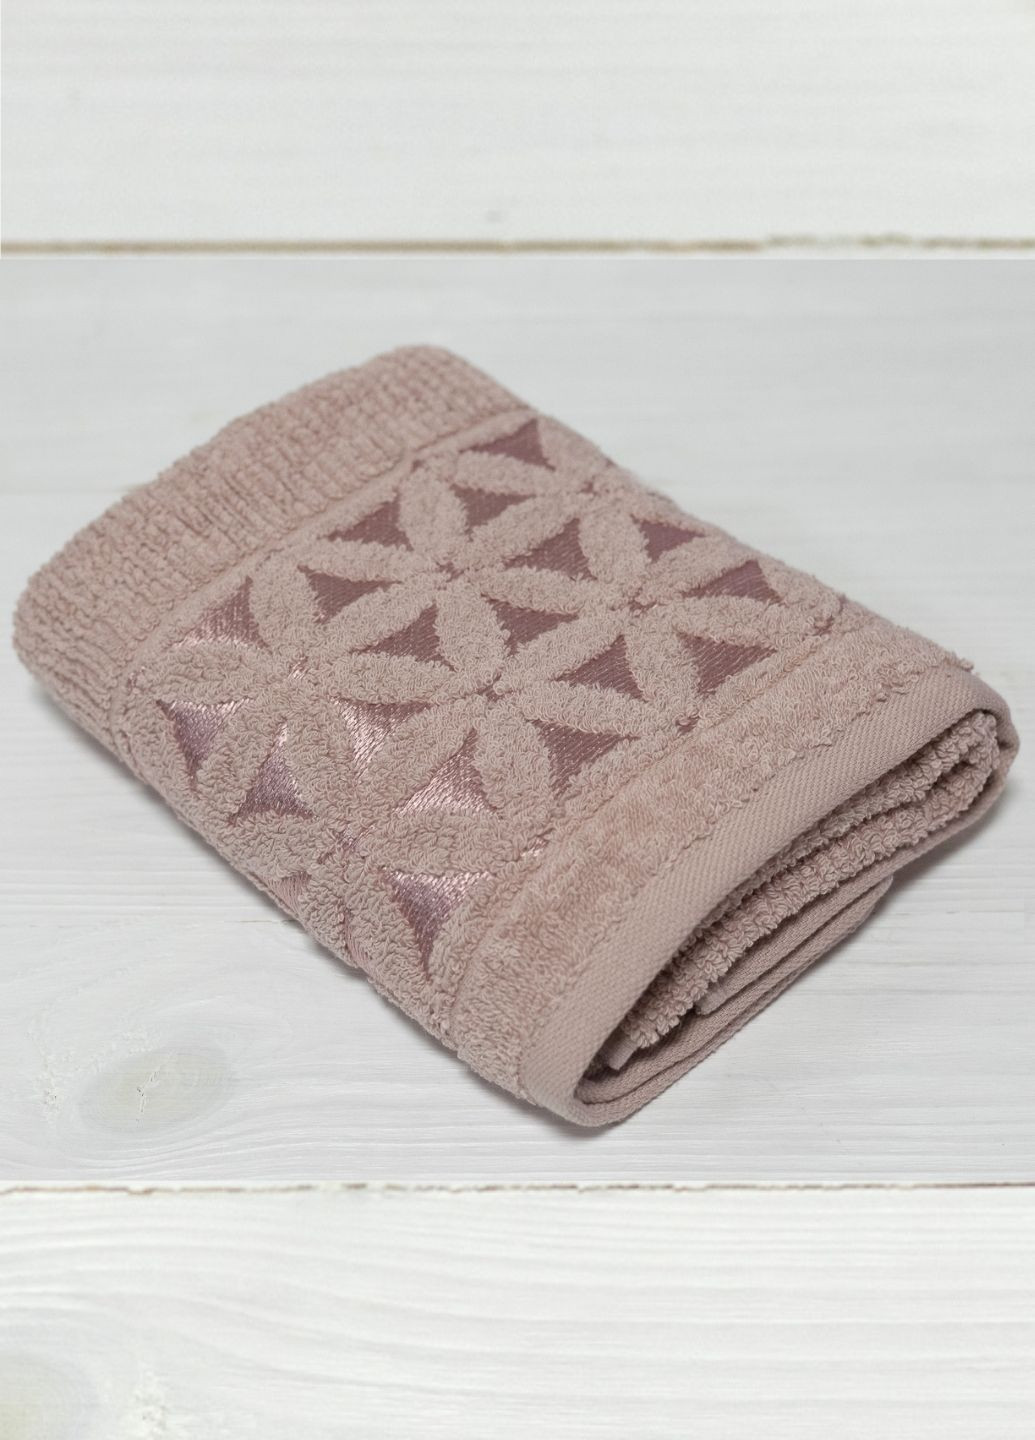 Sikel полотенце для лица 50х90 см розовый однотонный розовый производство - Турция